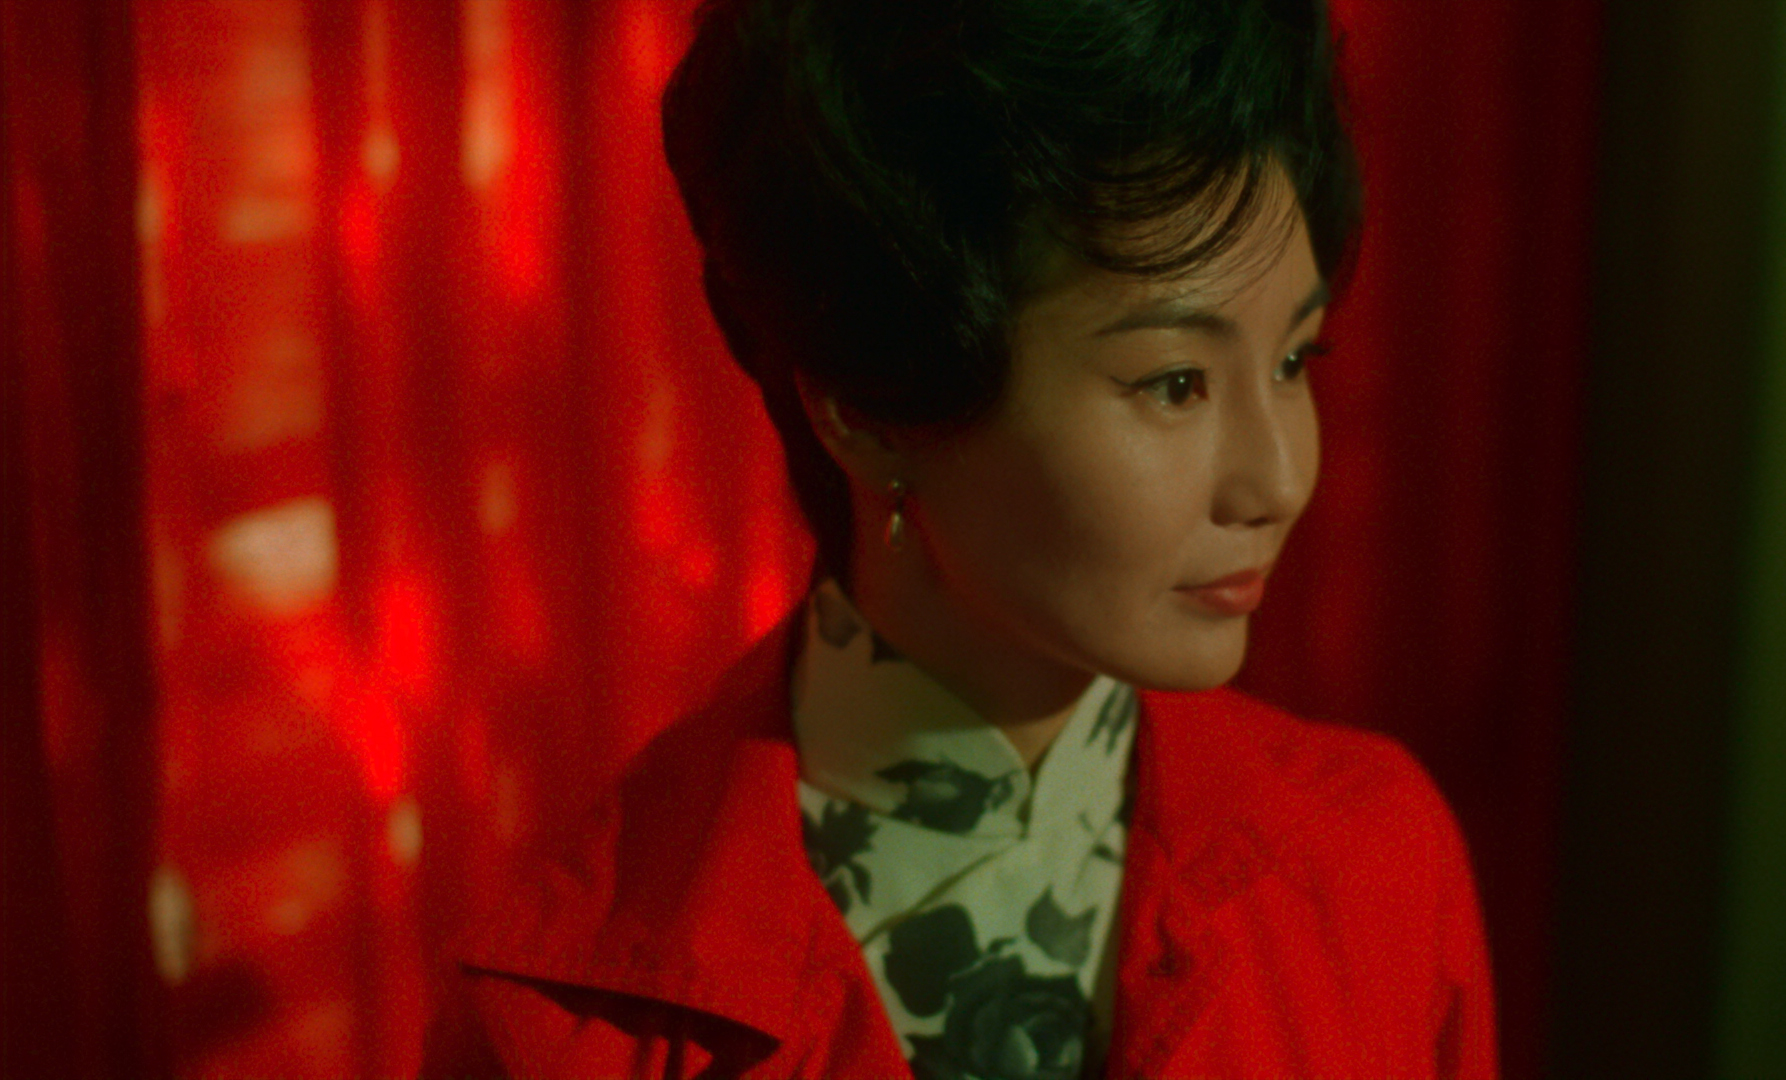 A still from Wong Kar Wai's "In the Mood for Love, streaming through Sag Harbor Virtual Cinema.